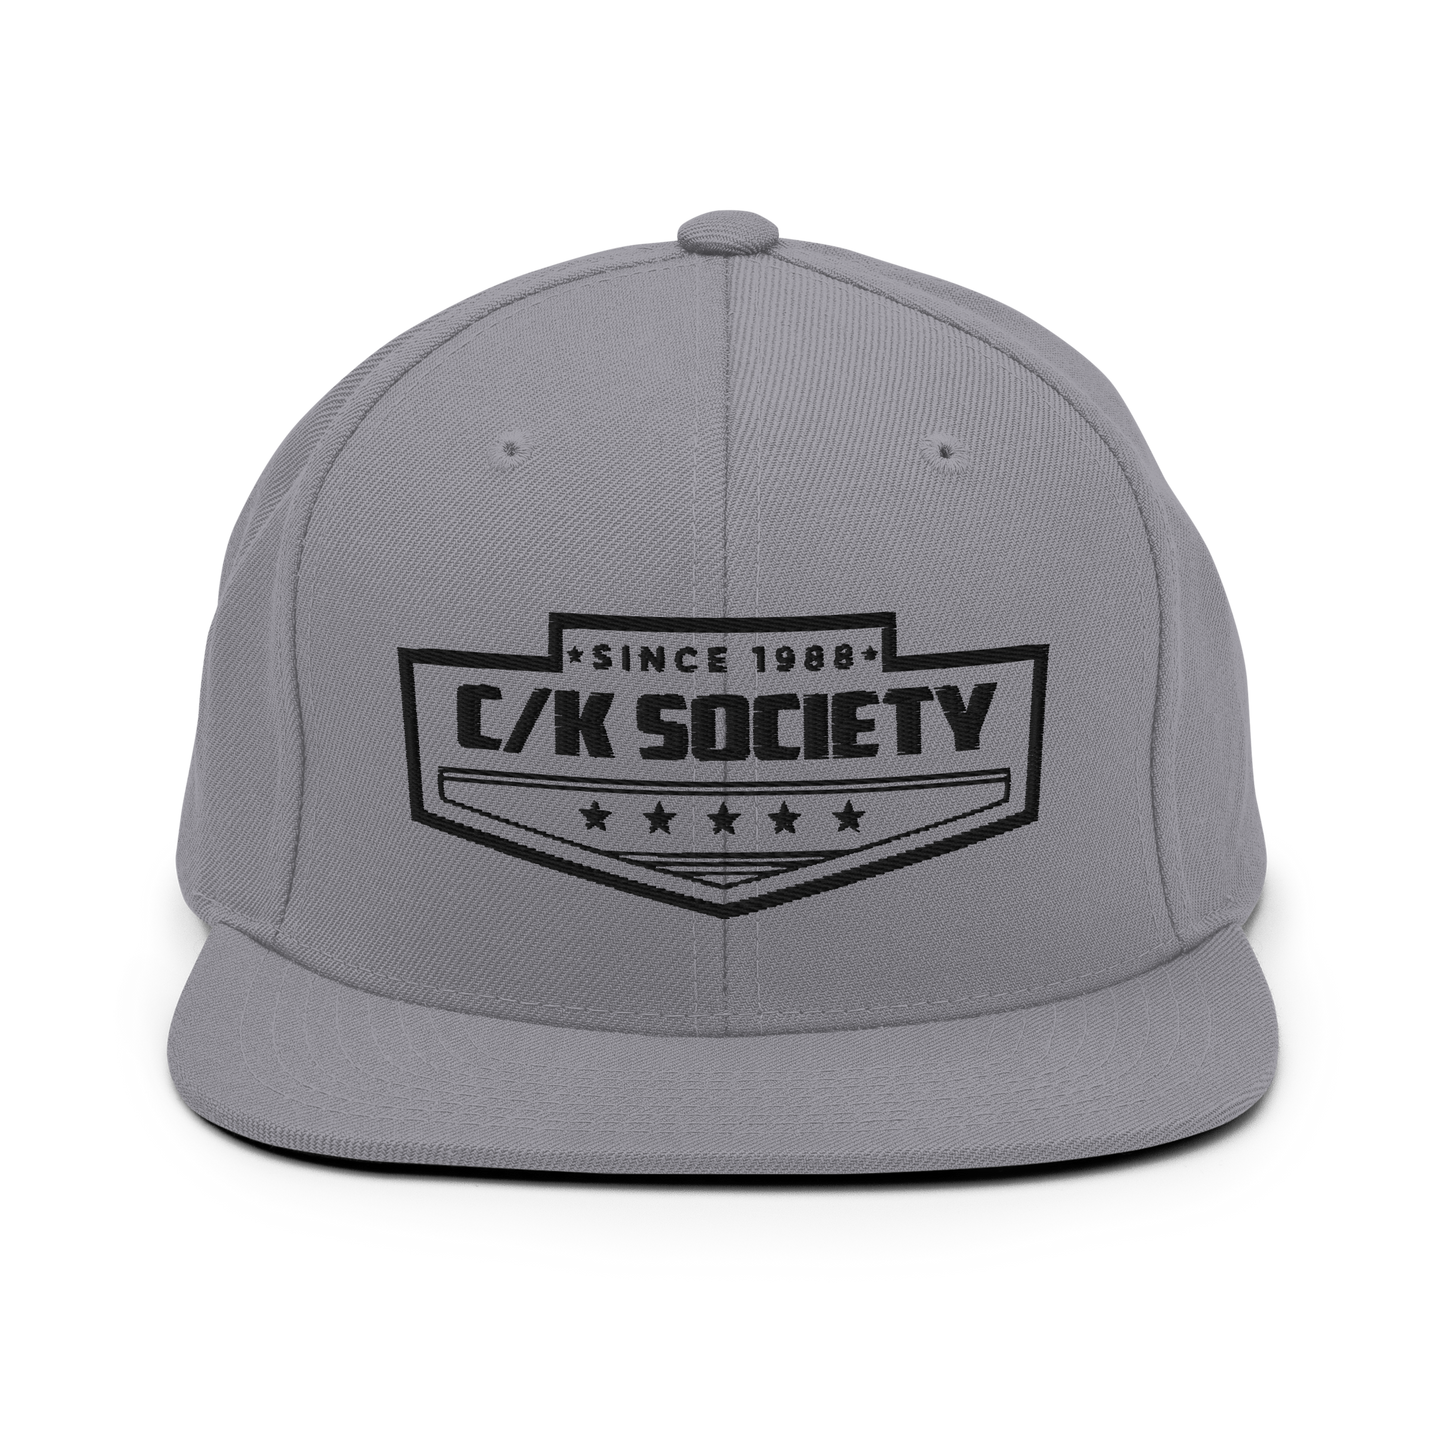 C/K Society Chevrolet, GMC OBS Silver Yupoong Flatbill Snapback Hat